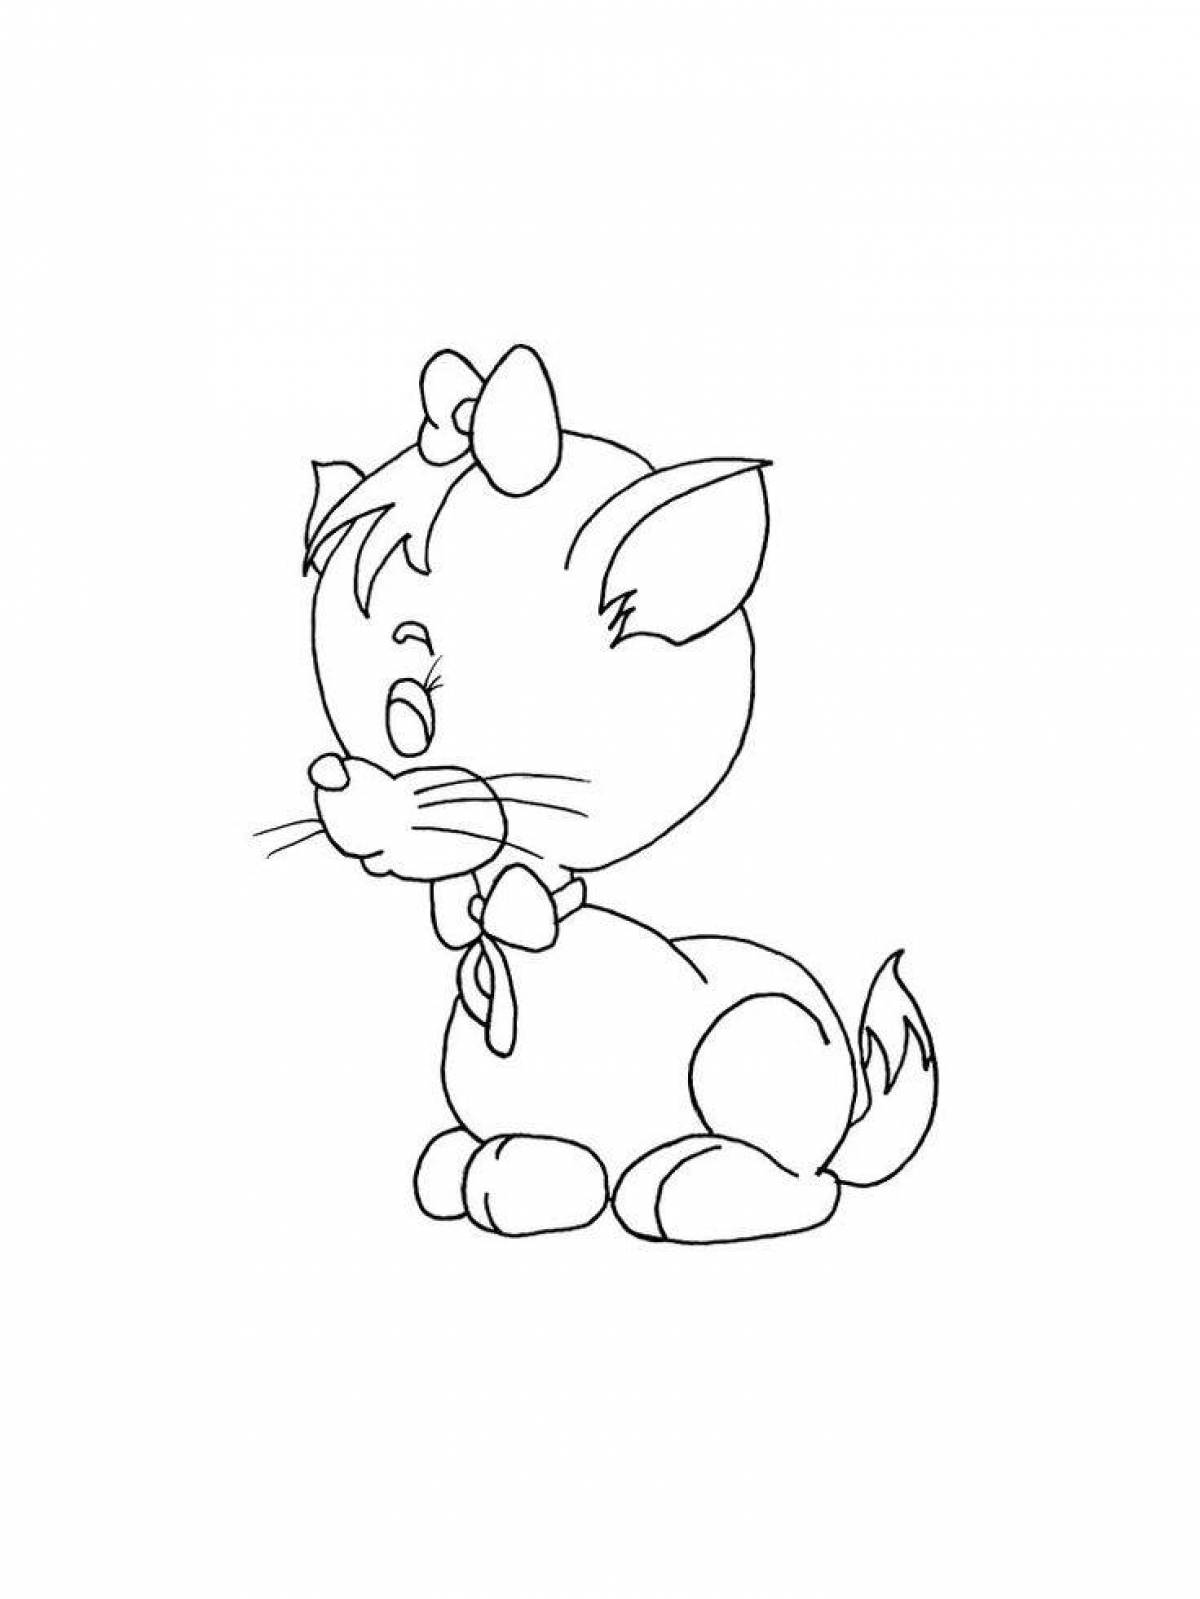 Cheerful kitten coloring for children